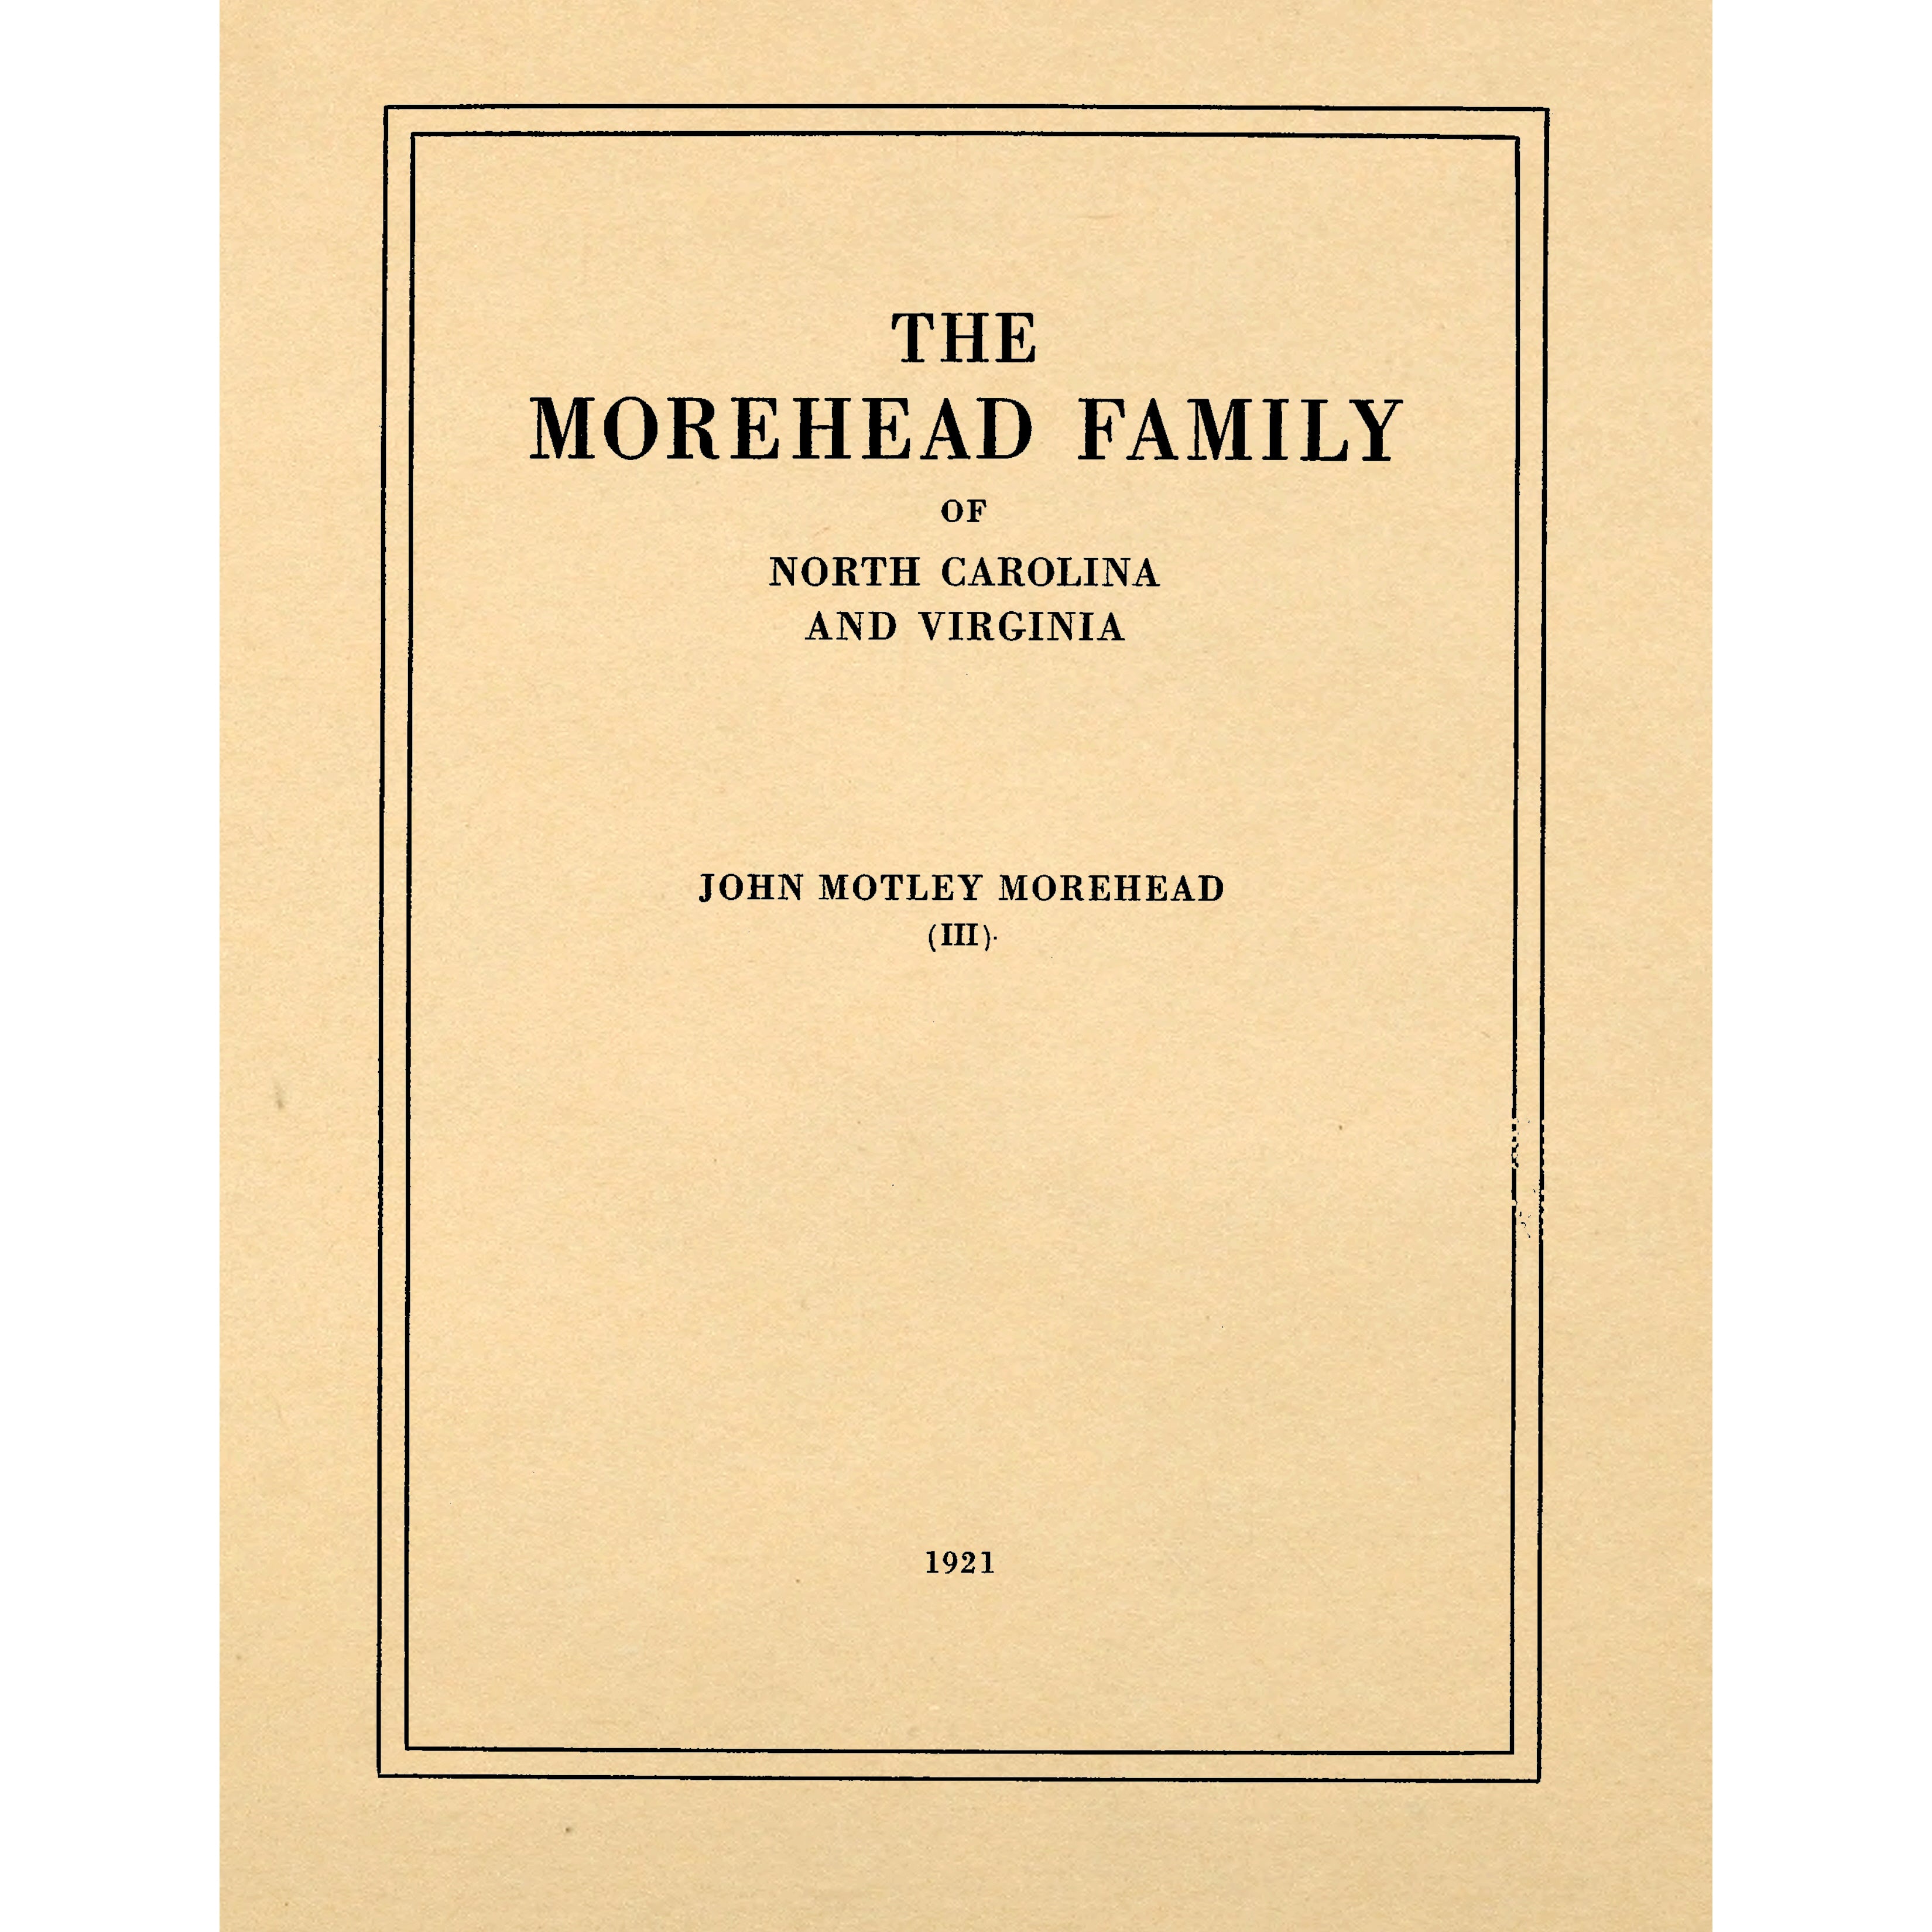 The Morehead family of North Carolina and Virginia